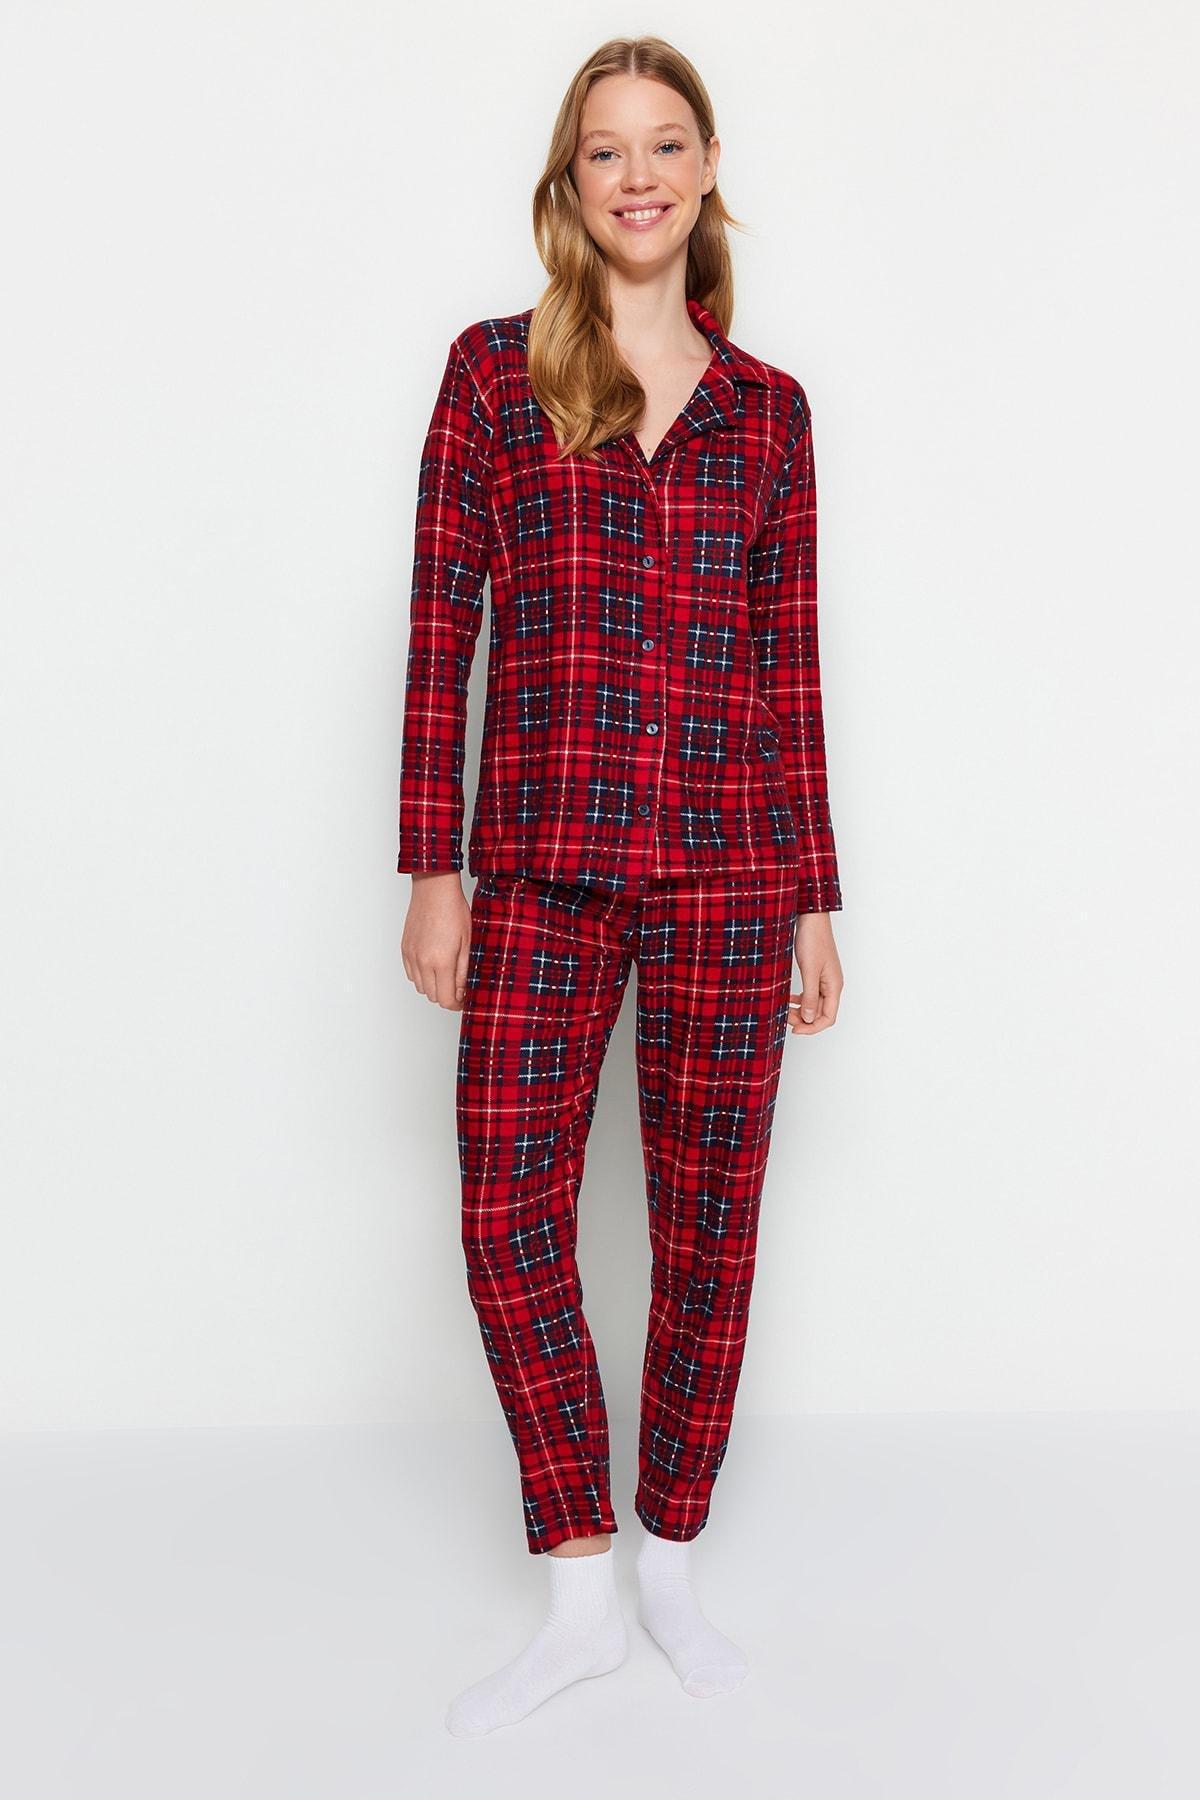 Trendyol - Red Checkered Knitted Pyjamas Set